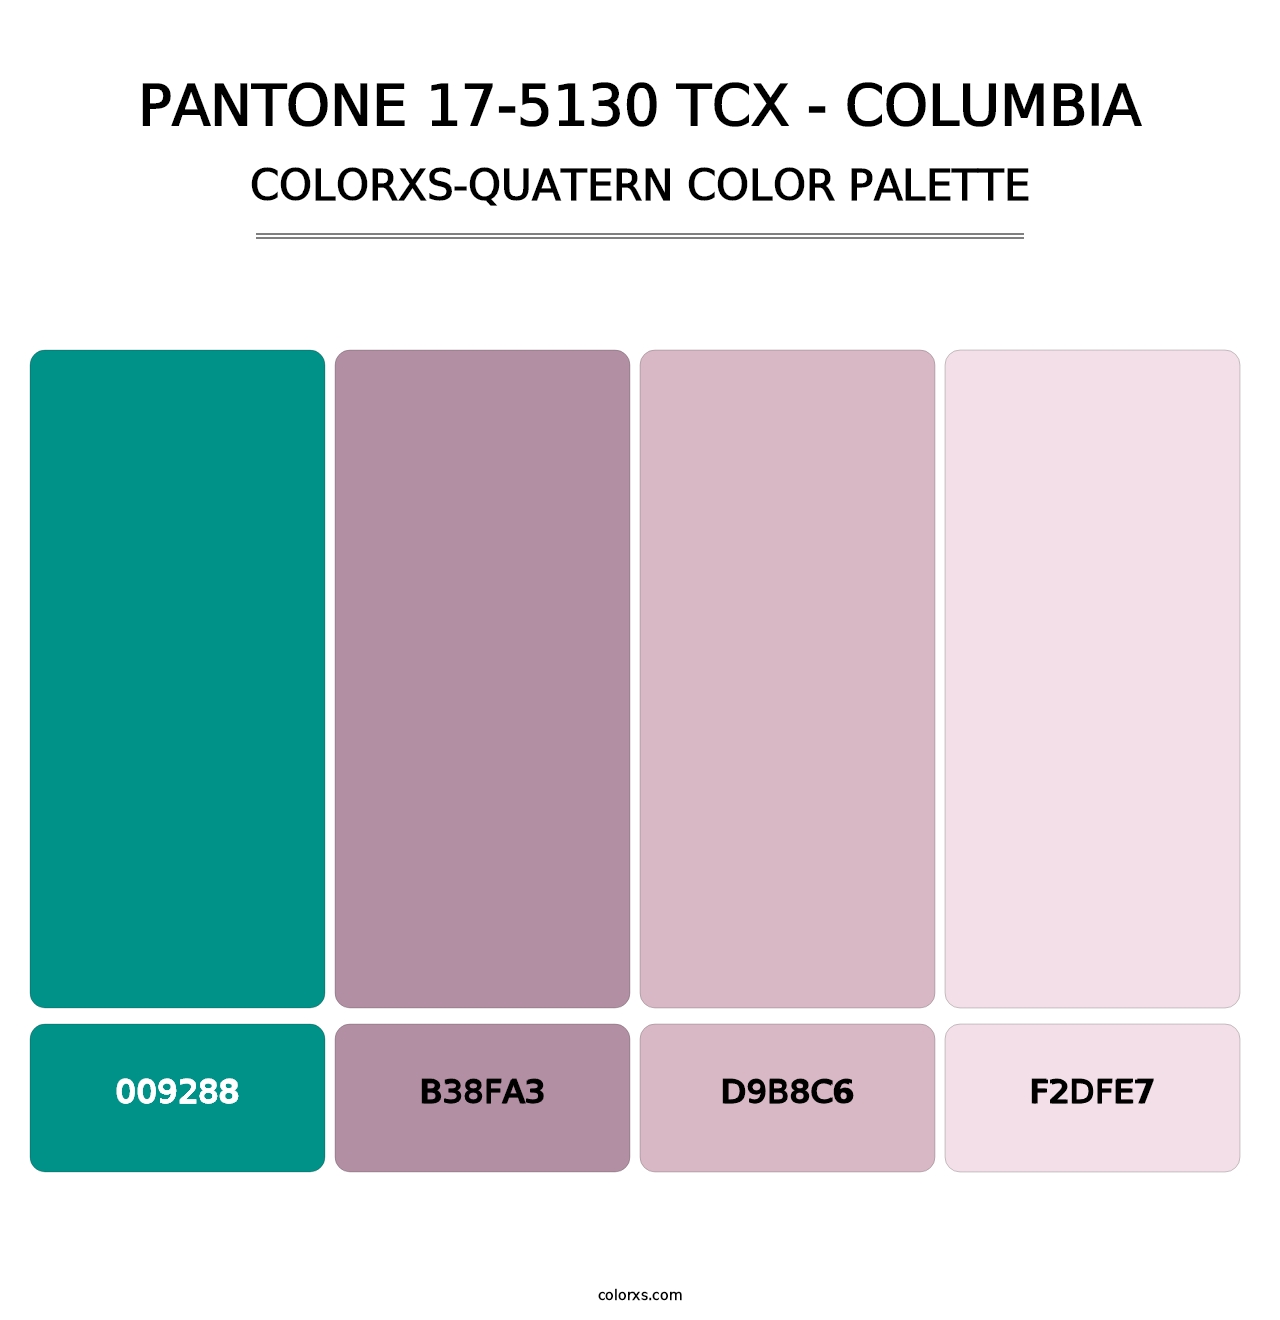 PANTONE 17-5130 TCX - Columbia - Colorxs Quatern Palette